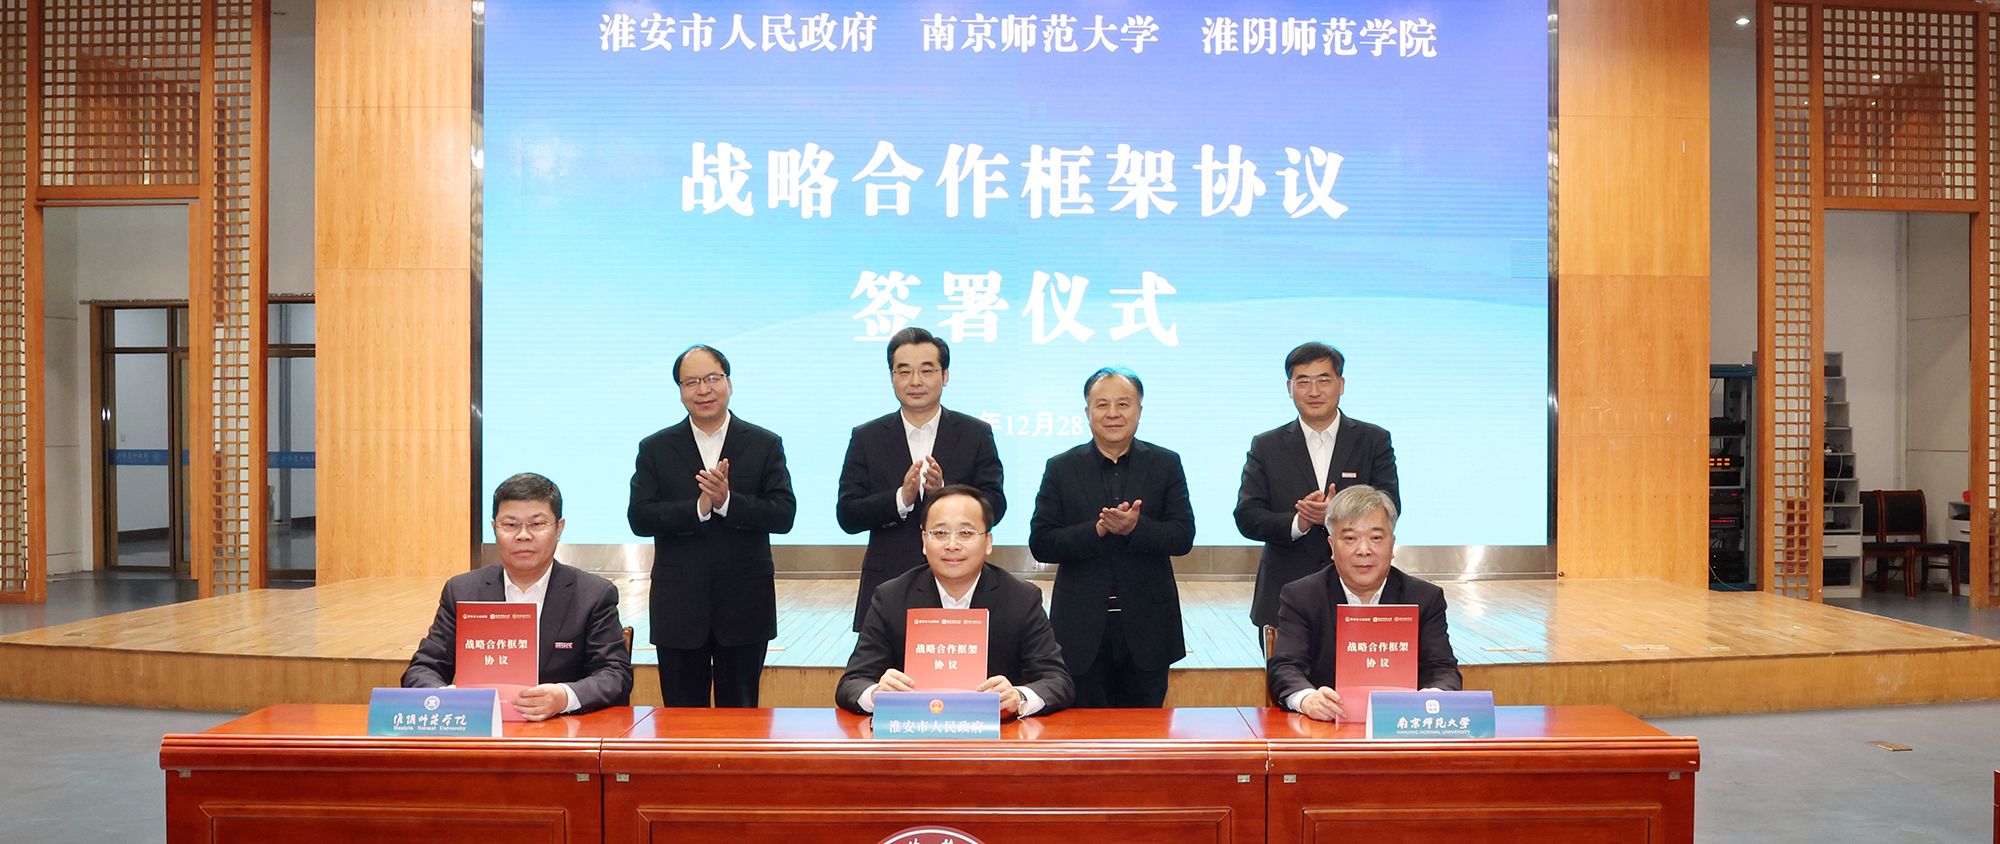 beat365唯一官网与淮安市人民政府、南京师范大学签署战略合作框架协议